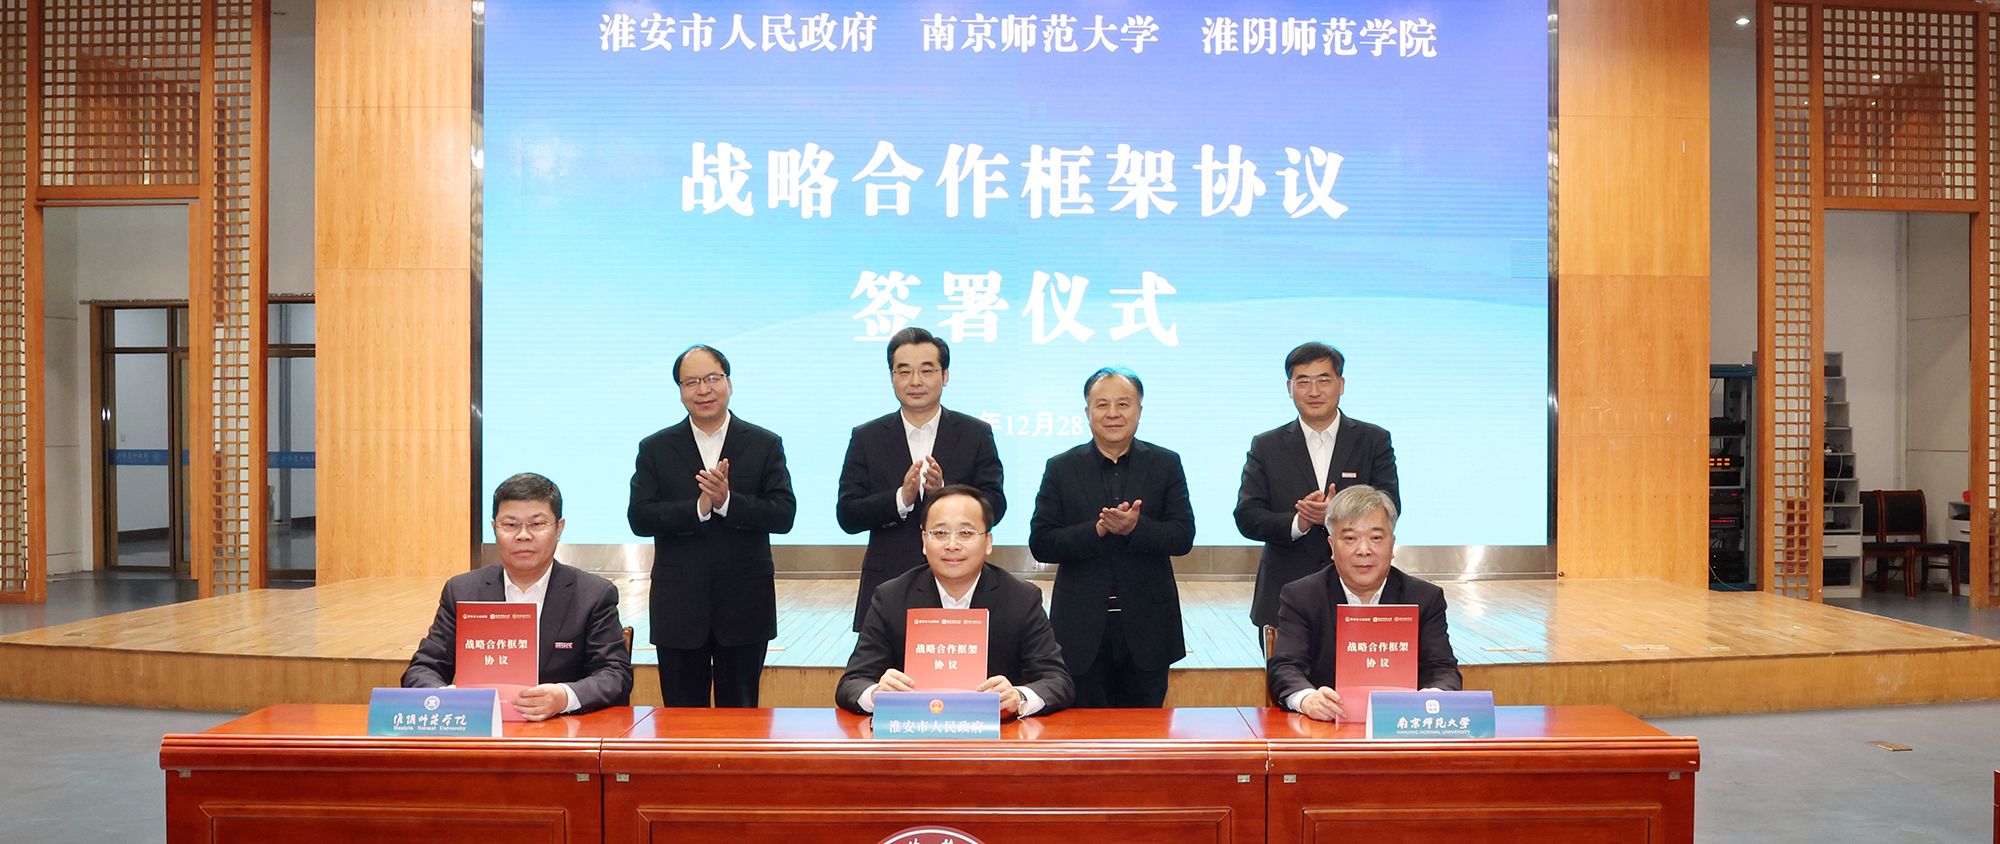 beat365唯一官网与淮安市人民政府、南京师范大学签署战略合作框架协议